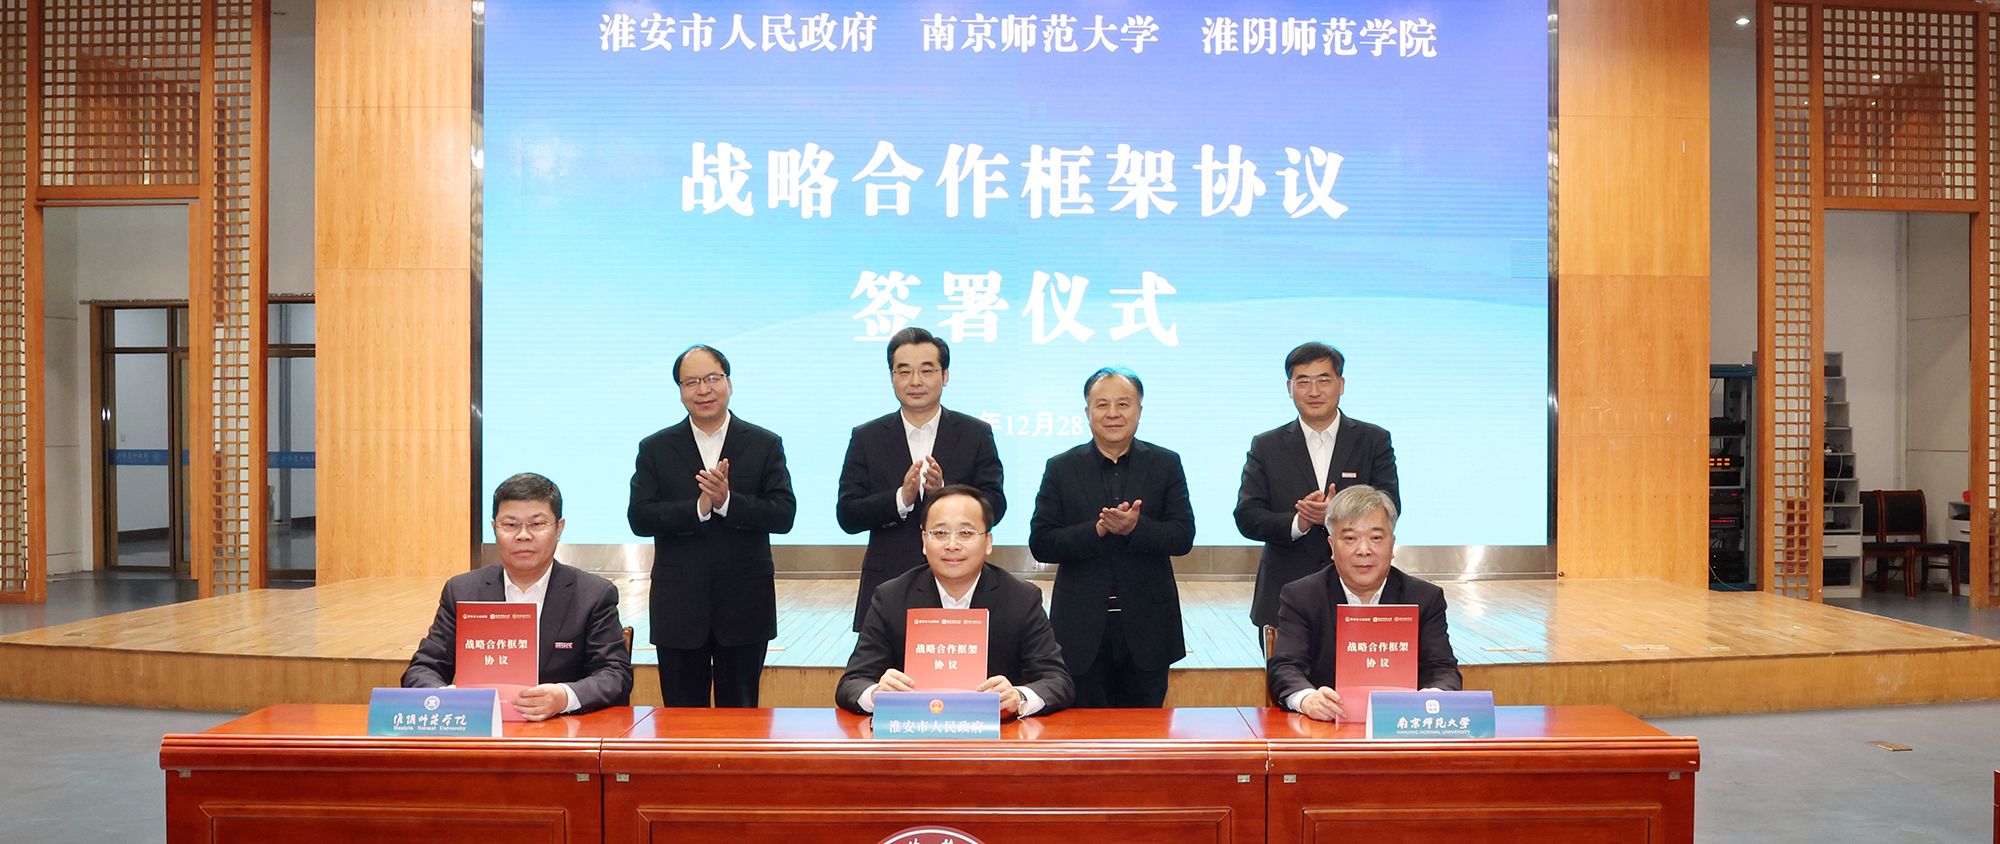 beat365唯一官网与淮安市人民政府、南京师范大学签署战略合作框架协议